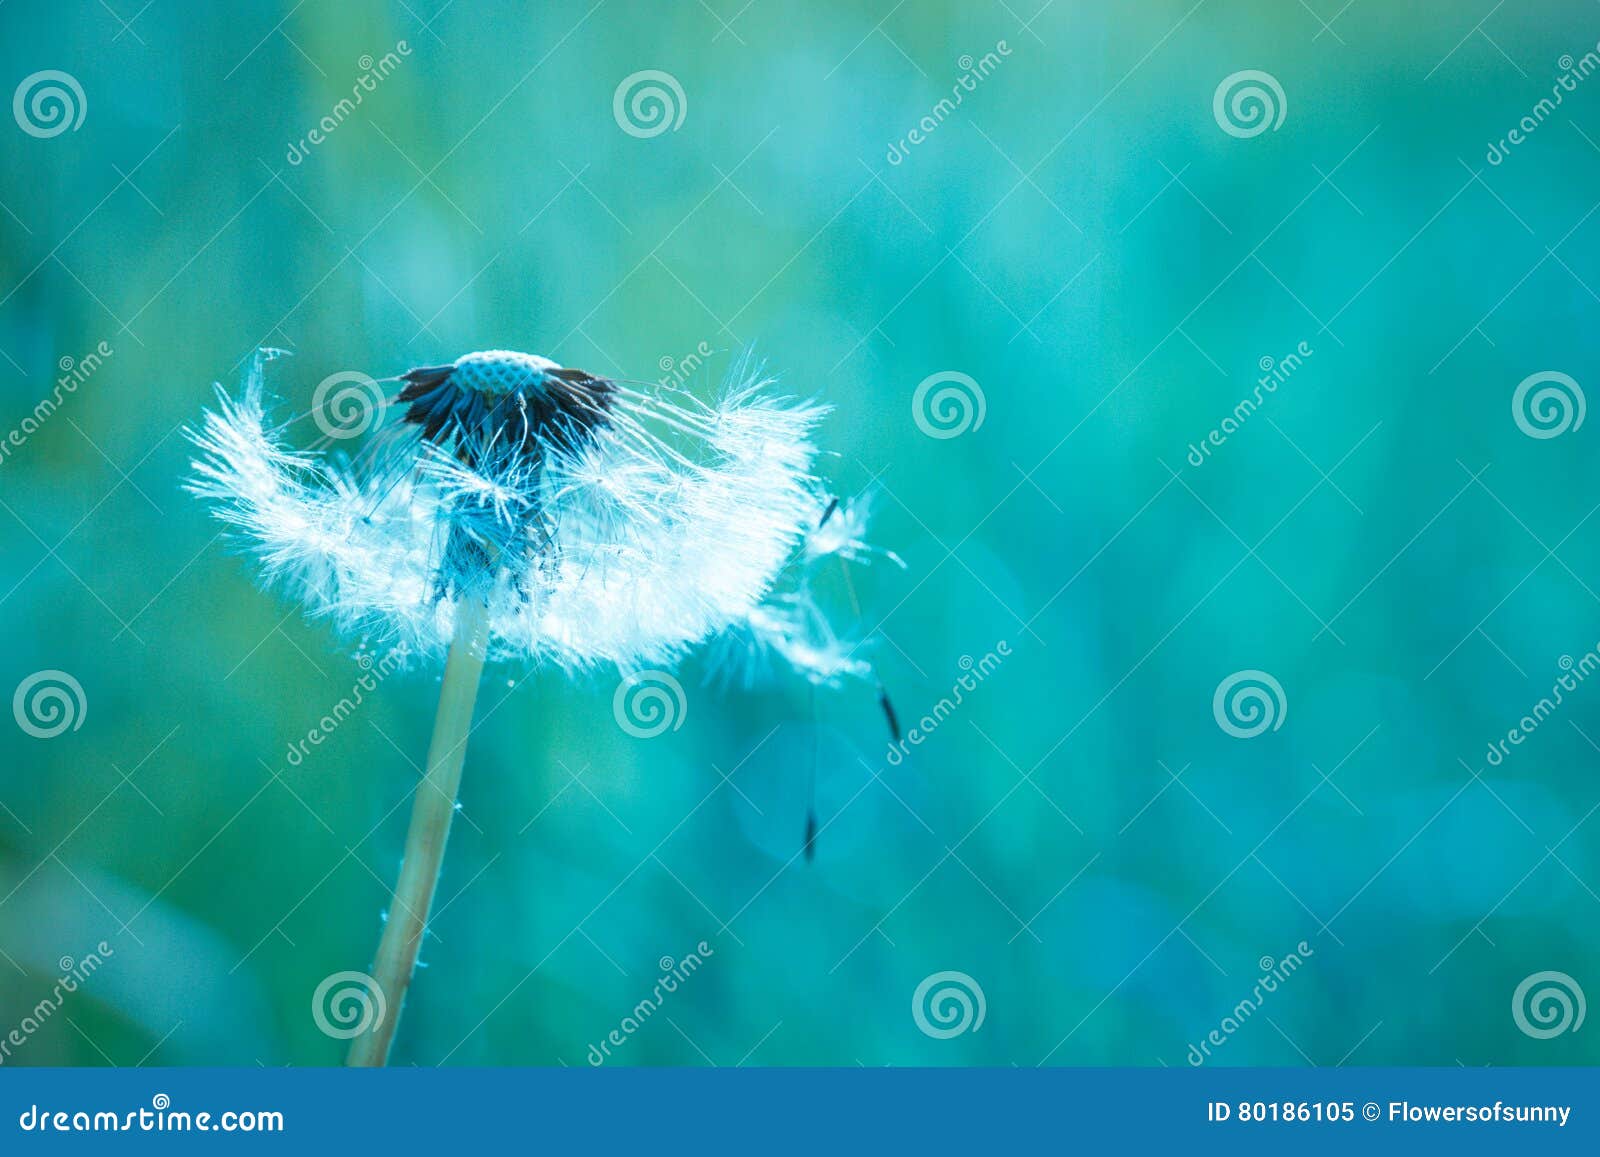 Beautiful Nature Background Concept Design Stock Image - Image of daisy